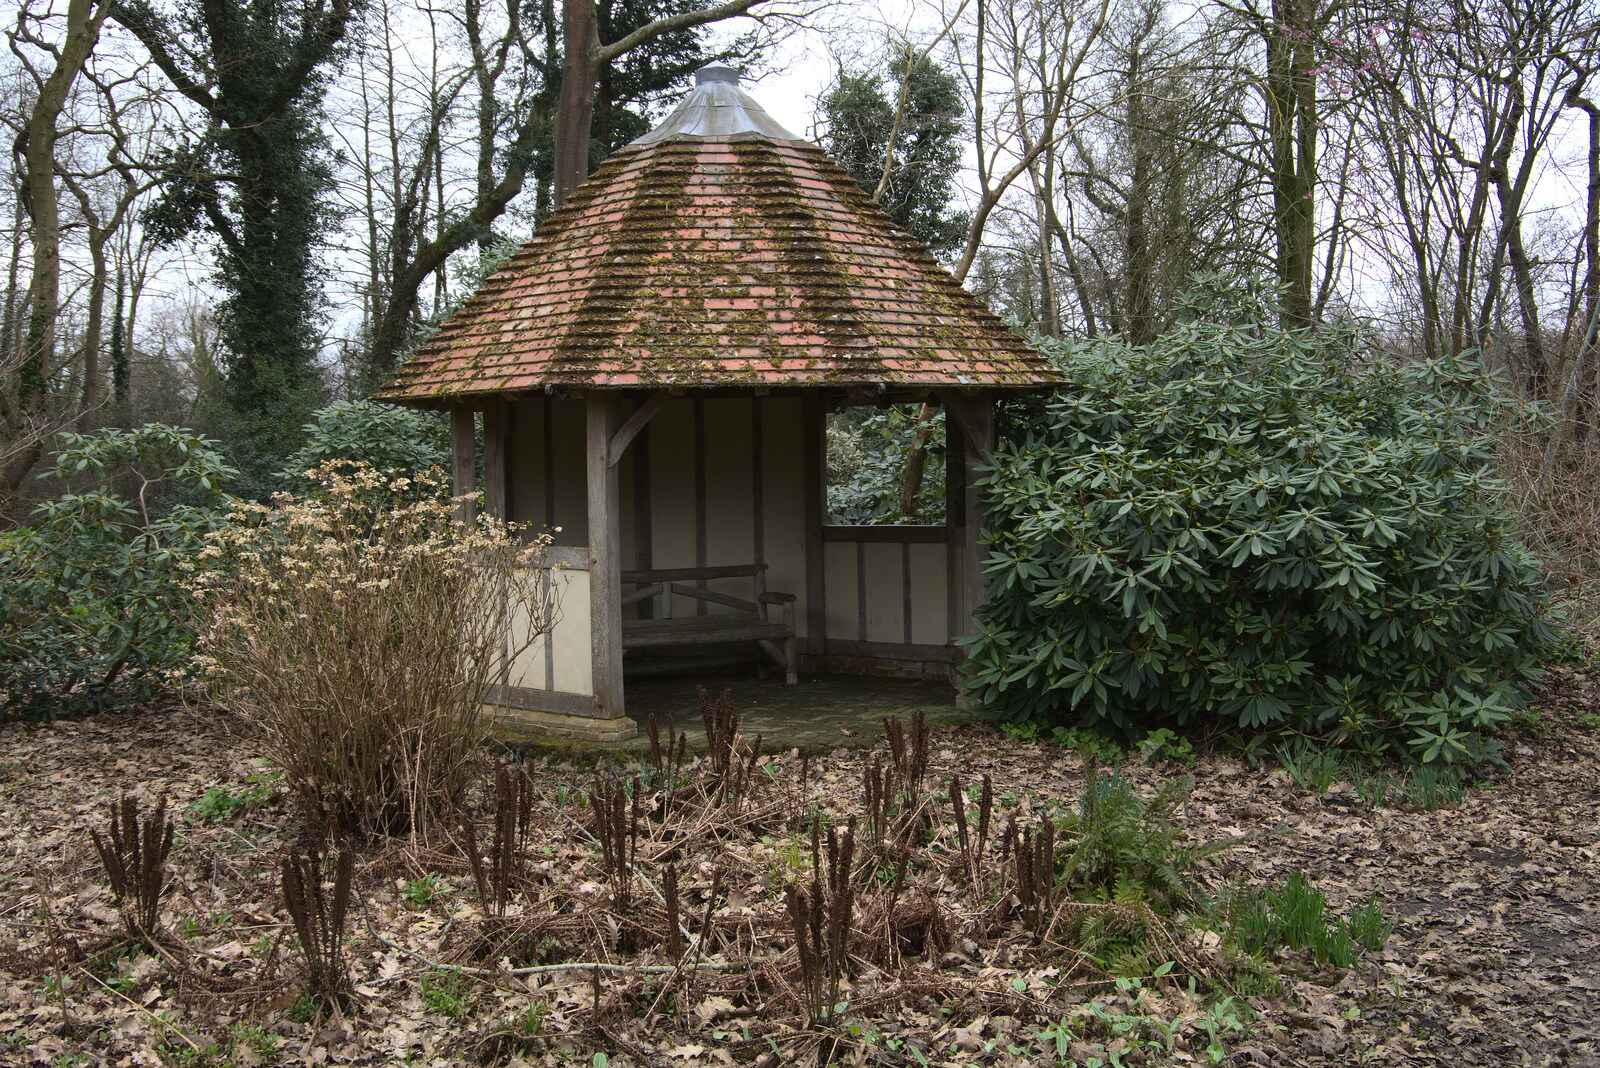 An octagonal garden house from A Return to Bressingham Steam and Gardens, Bressingham, Norfolk - 28th March 2021